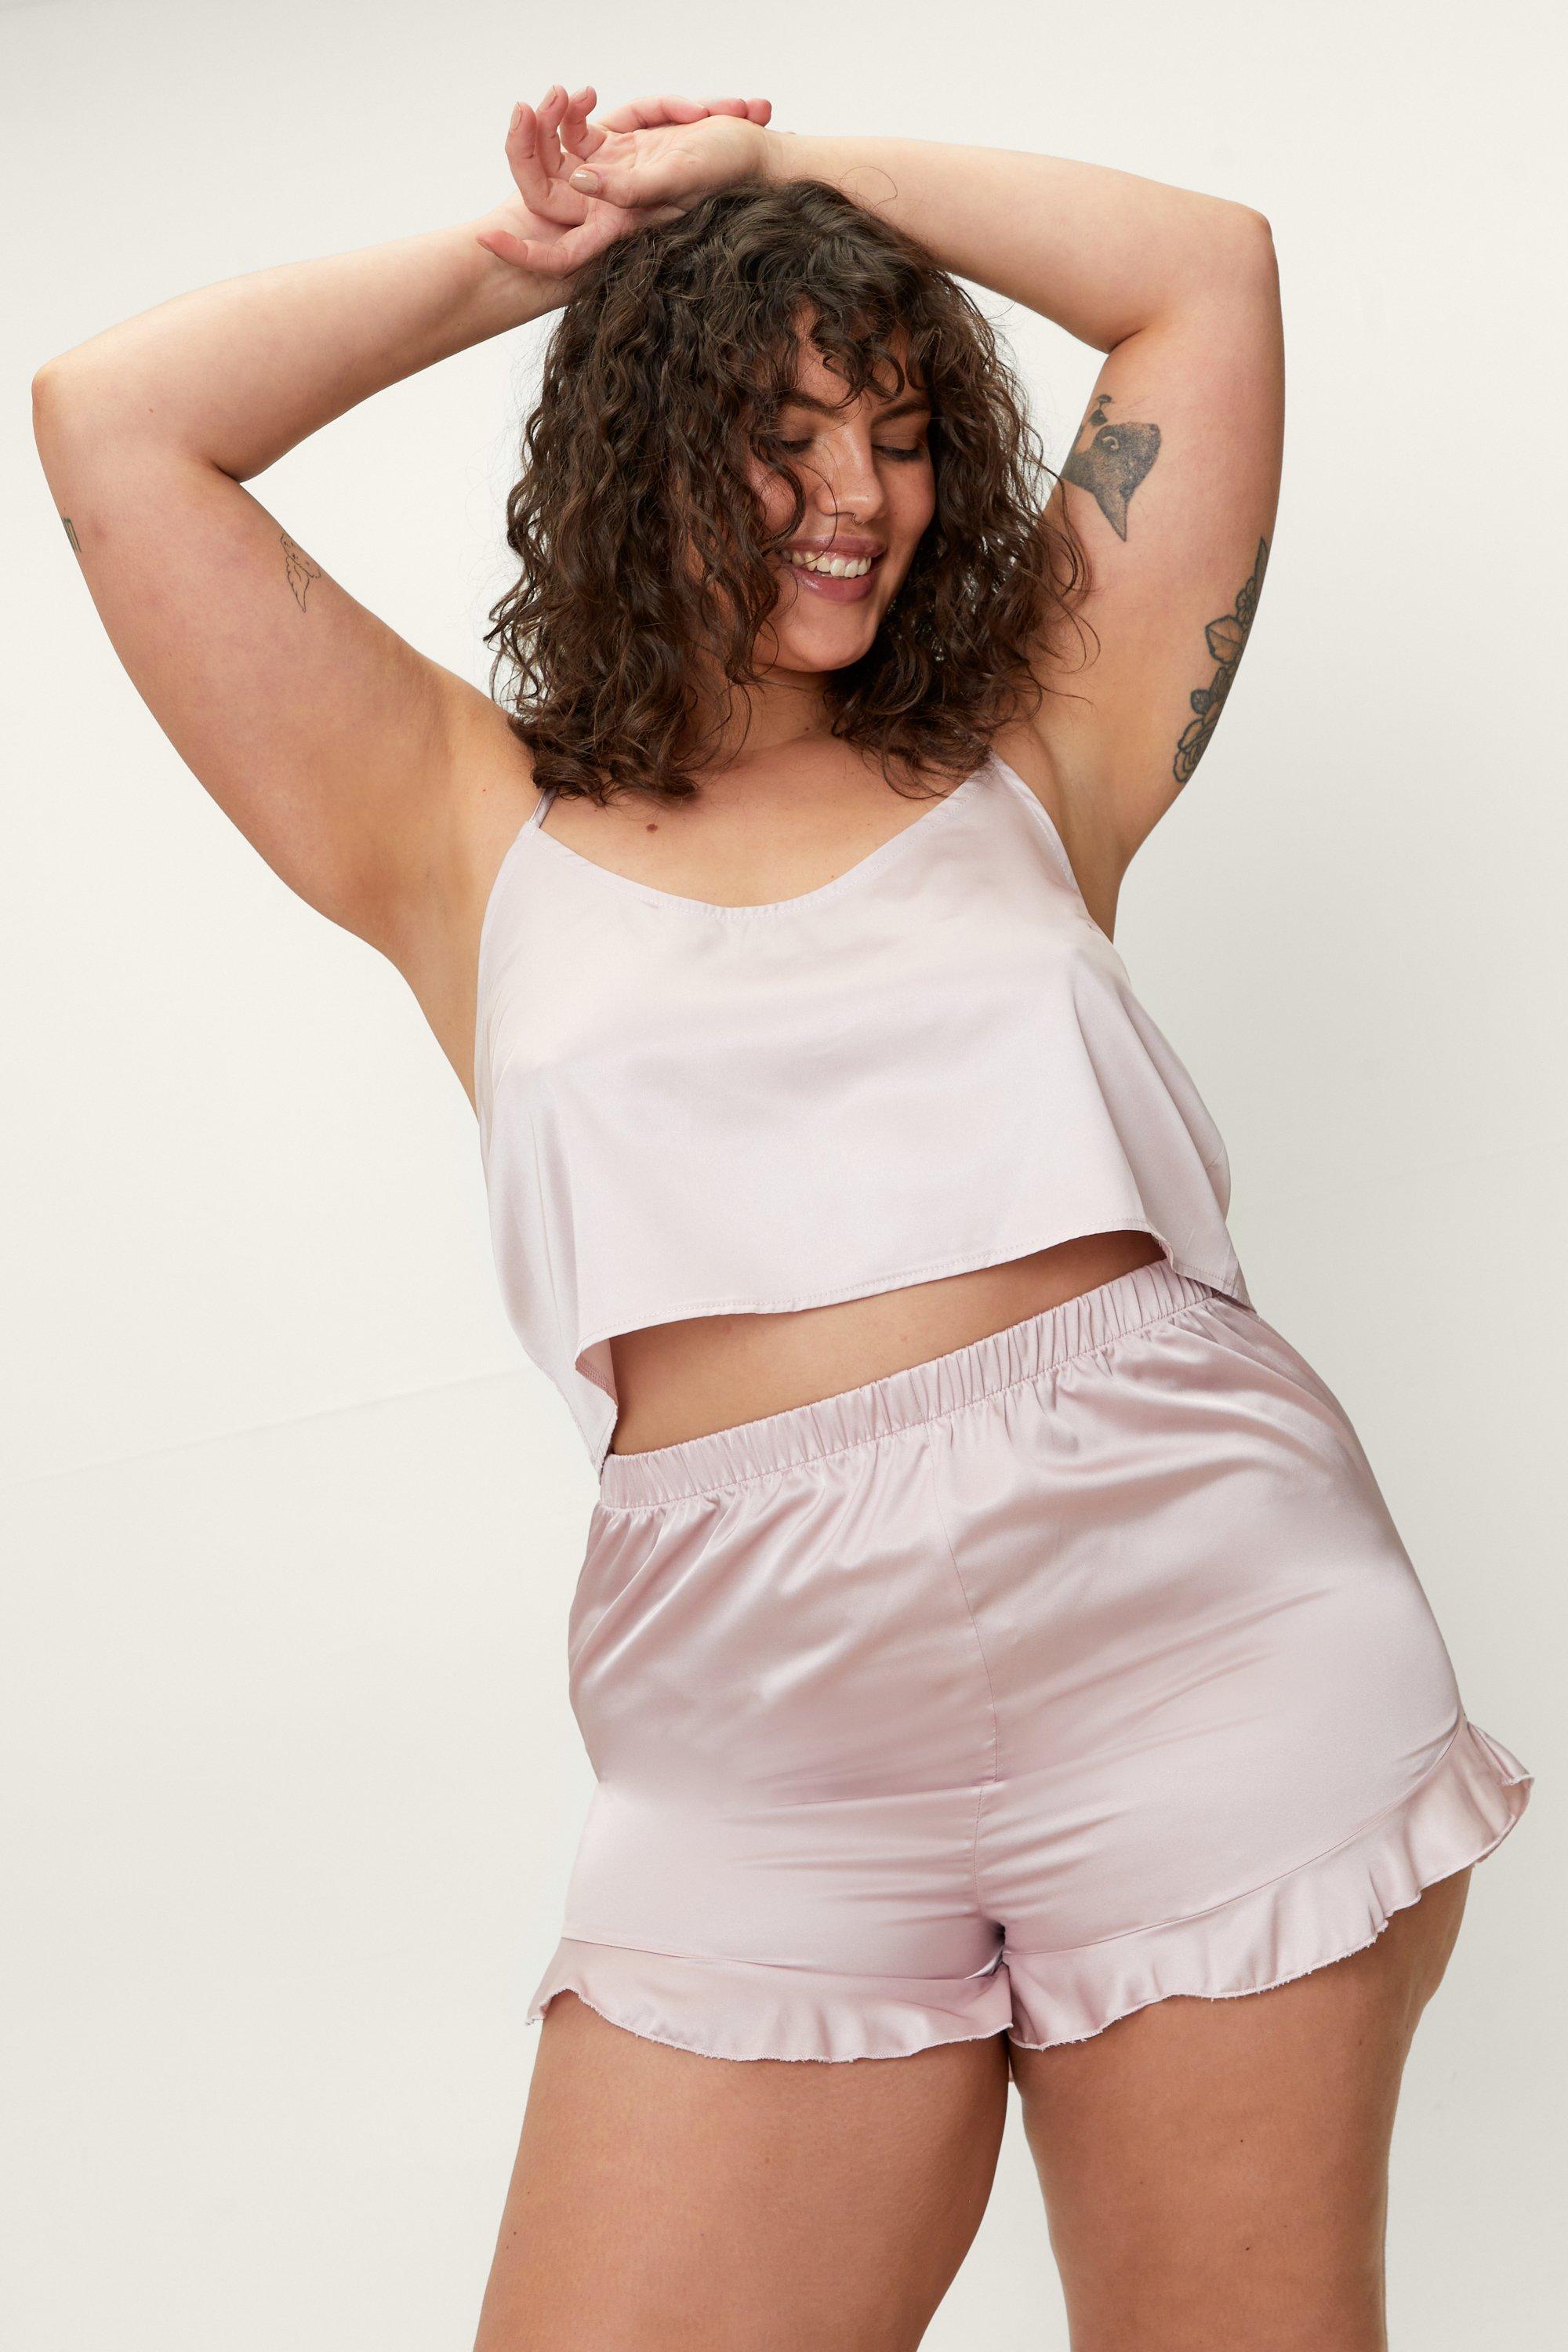 OYOANGLE Women's Plus Size Satin Pajama Set Sleepwear Pjs Nightwear Sexy  Lingerie Cami Shorts Set